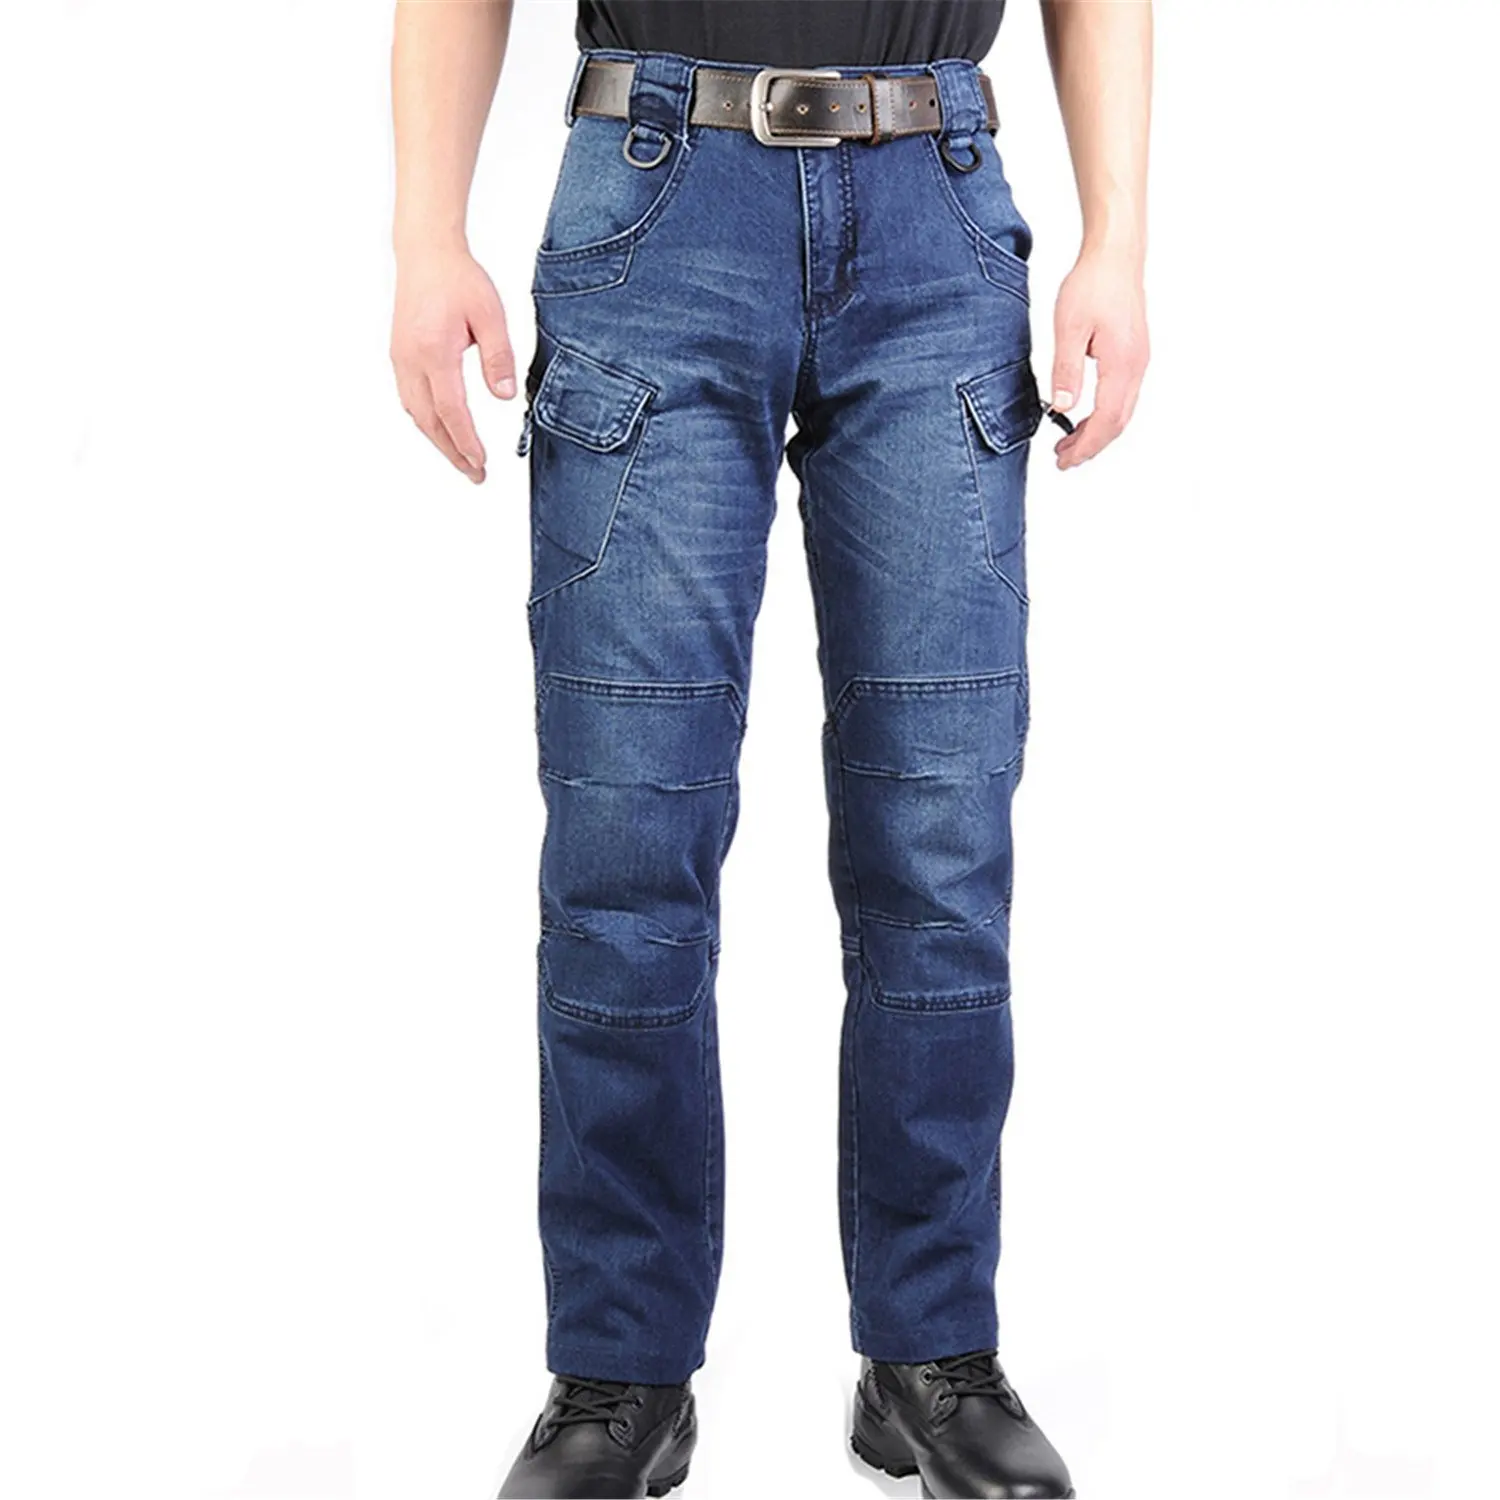 Cheap Combat Jeans Men, find Combat Jeans Men deals on line at Alibaba.com